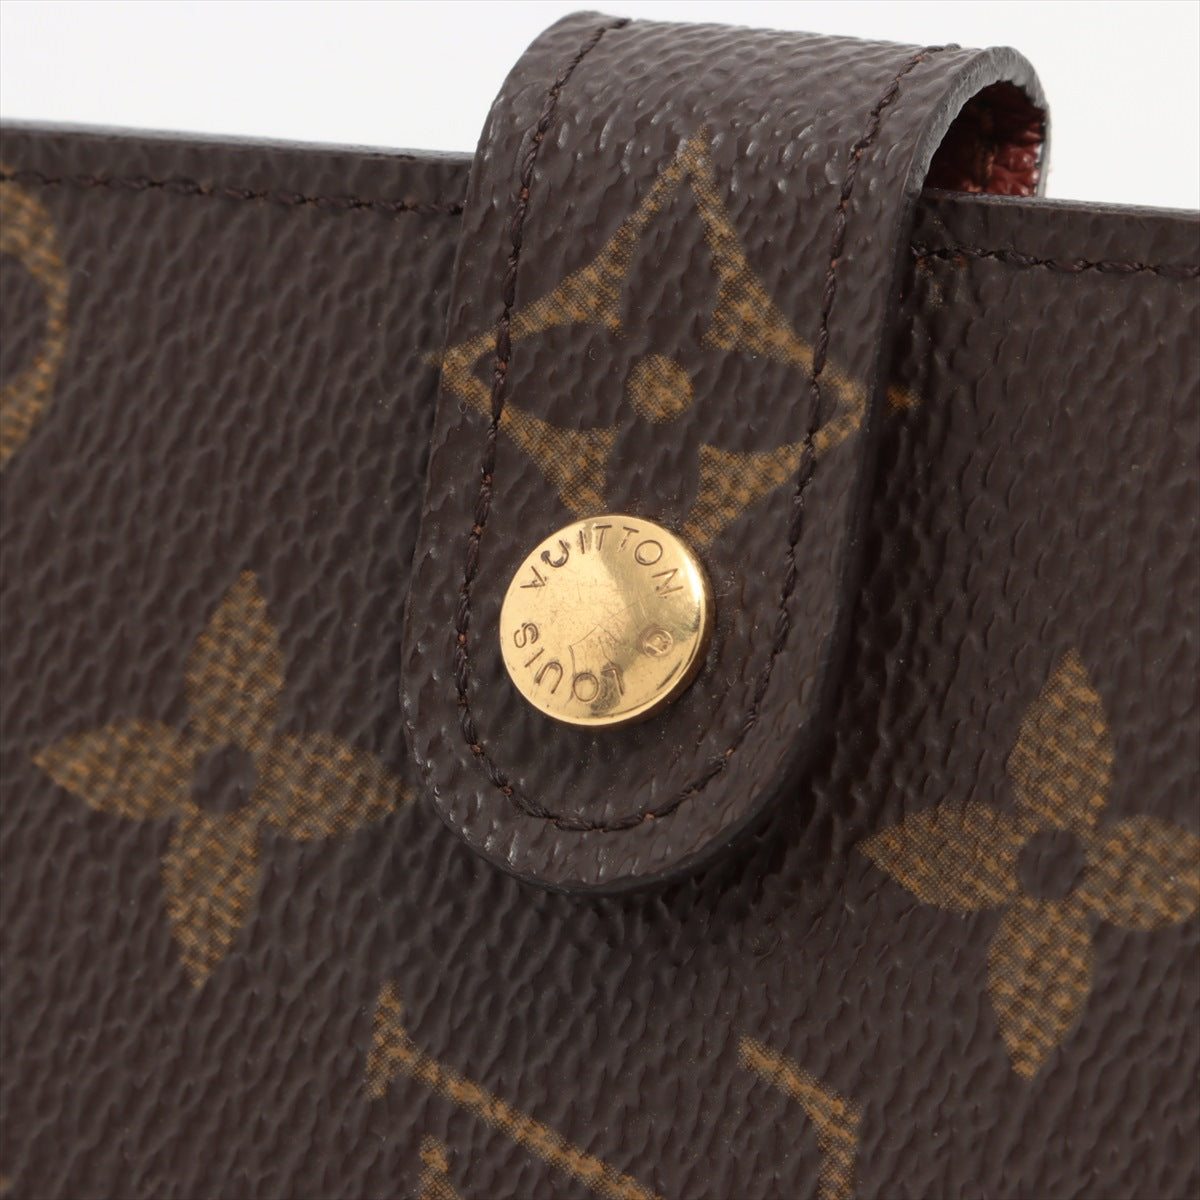 Louis Vuitton Agenda PM Monogram Wallet Limited Edition - THE PURSE AFFAIR